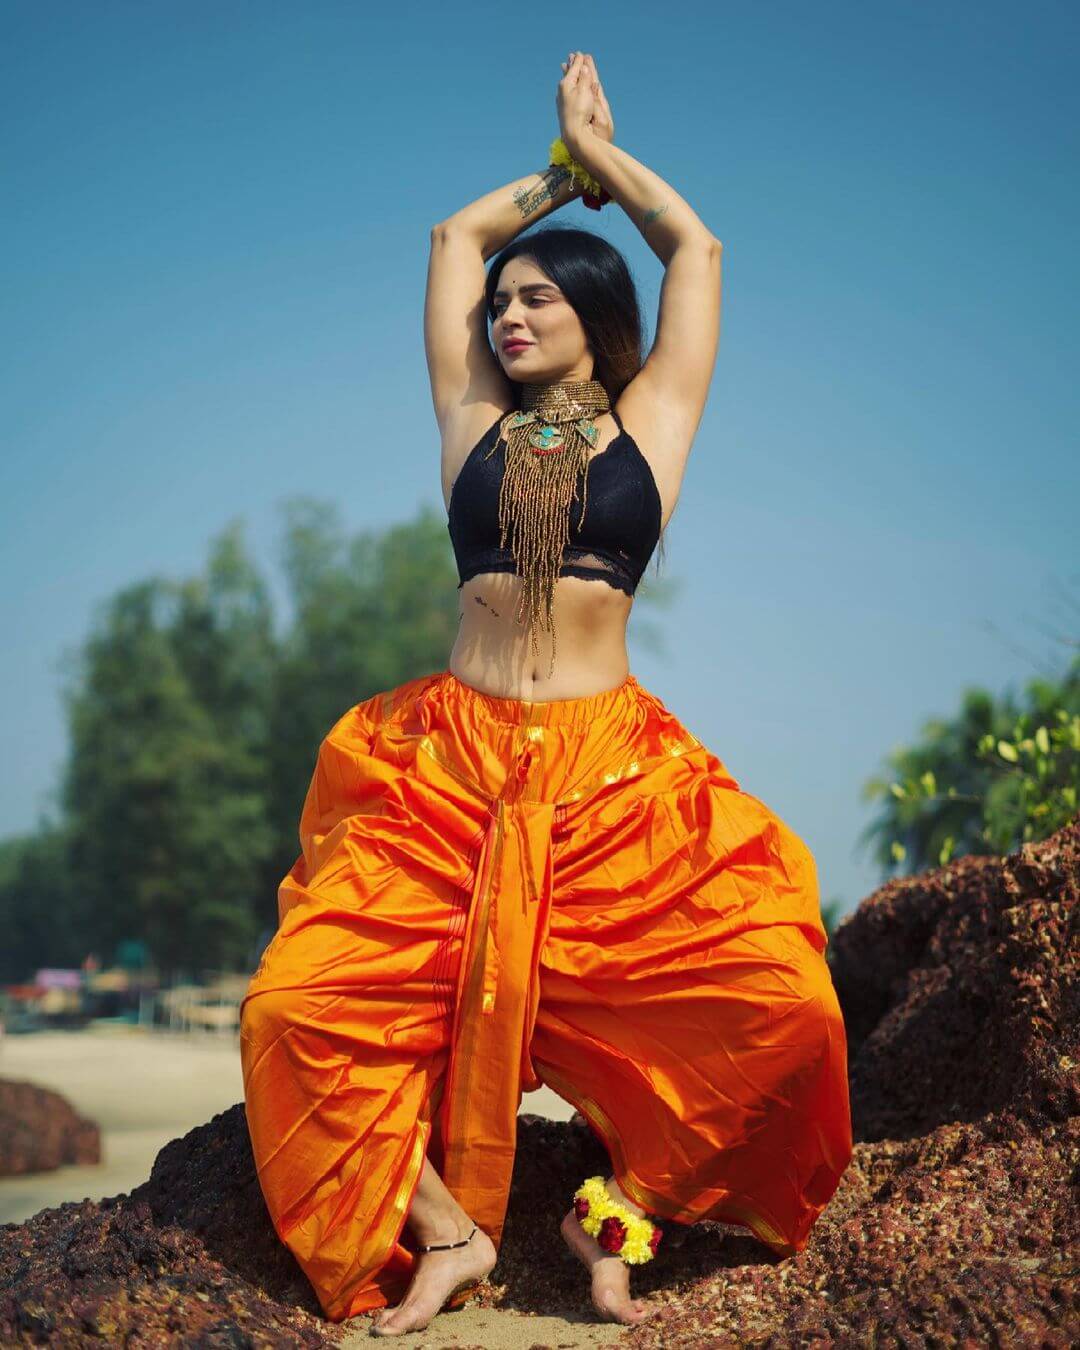 Aashika Goradia Slaying In Black Bralette With Orange Dhoti Outfit Aashka Goradia Sexy Outfit And Looks